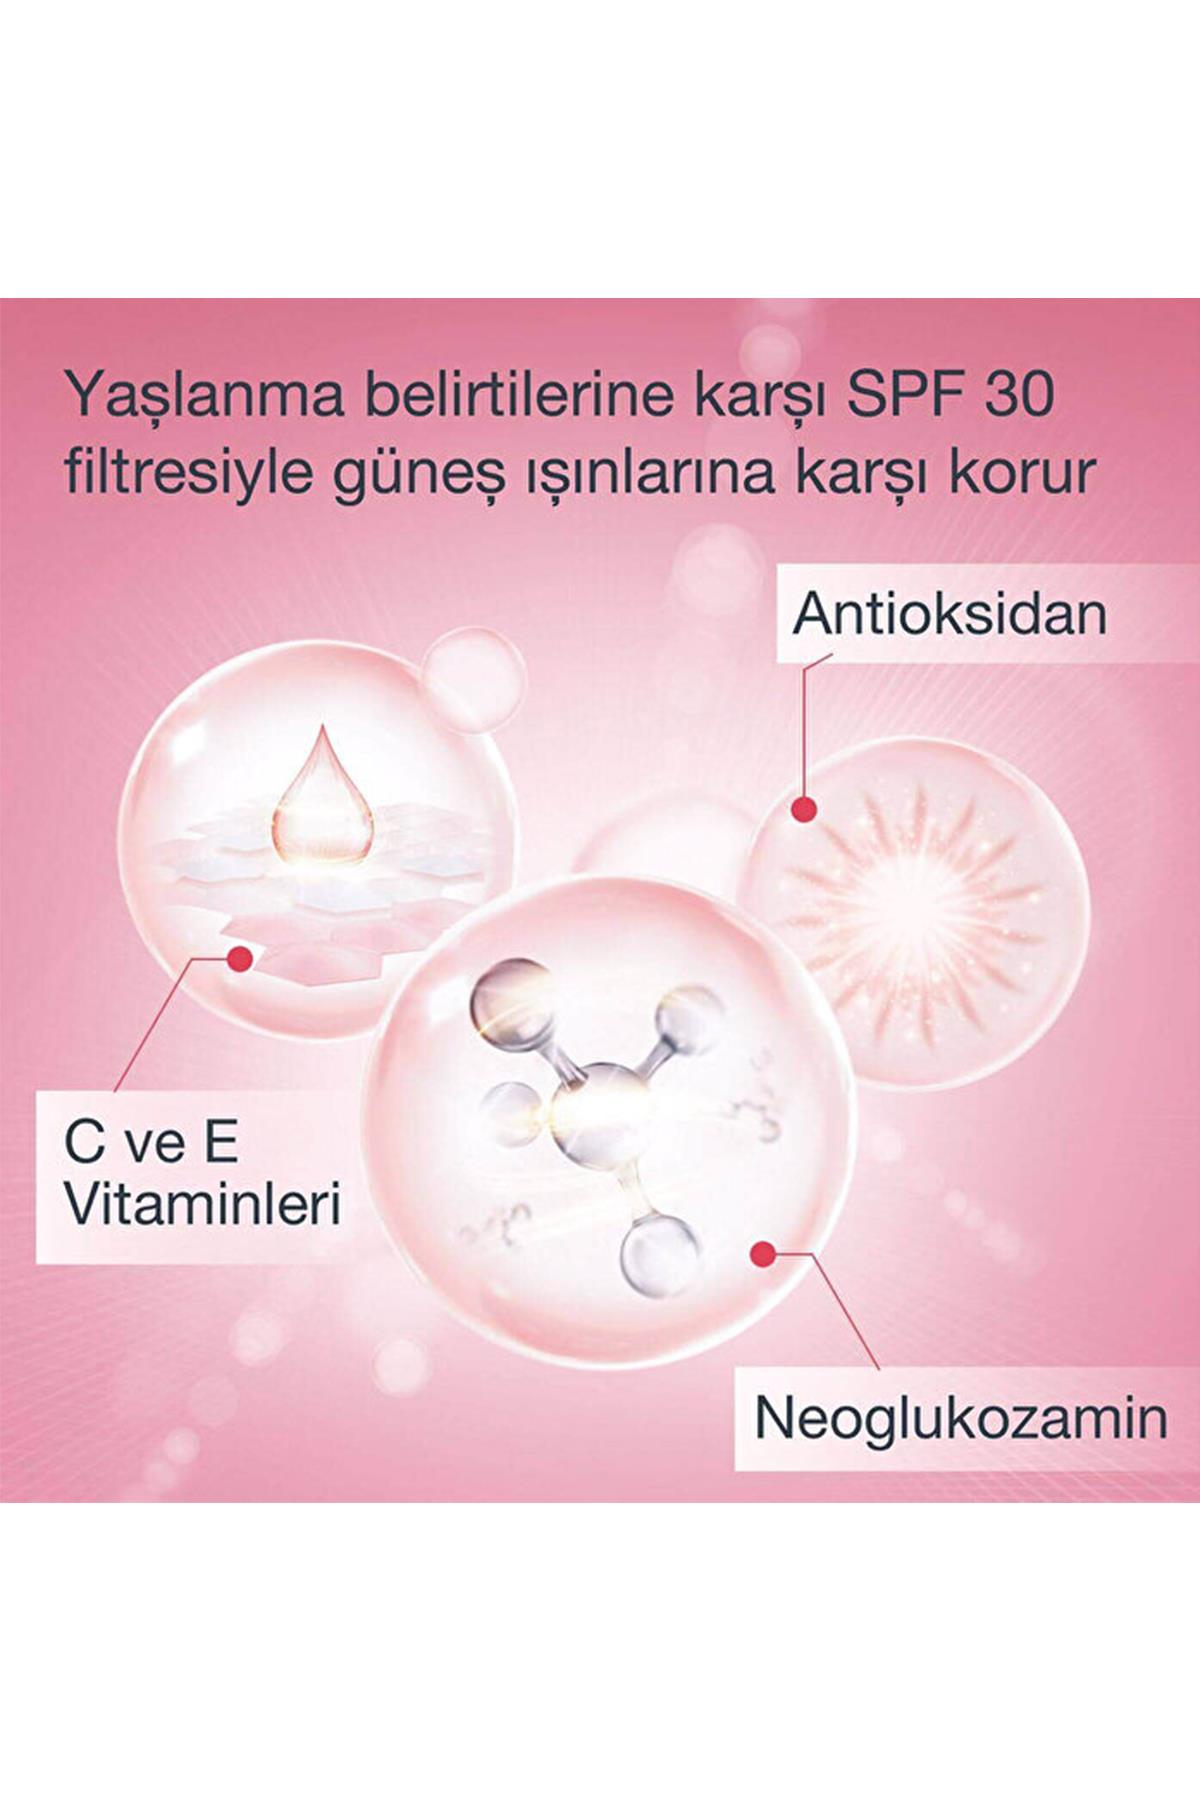 neutrogena-bright-boost-spf-30-koruyucu-krem-50-ml-5365-1.jpg